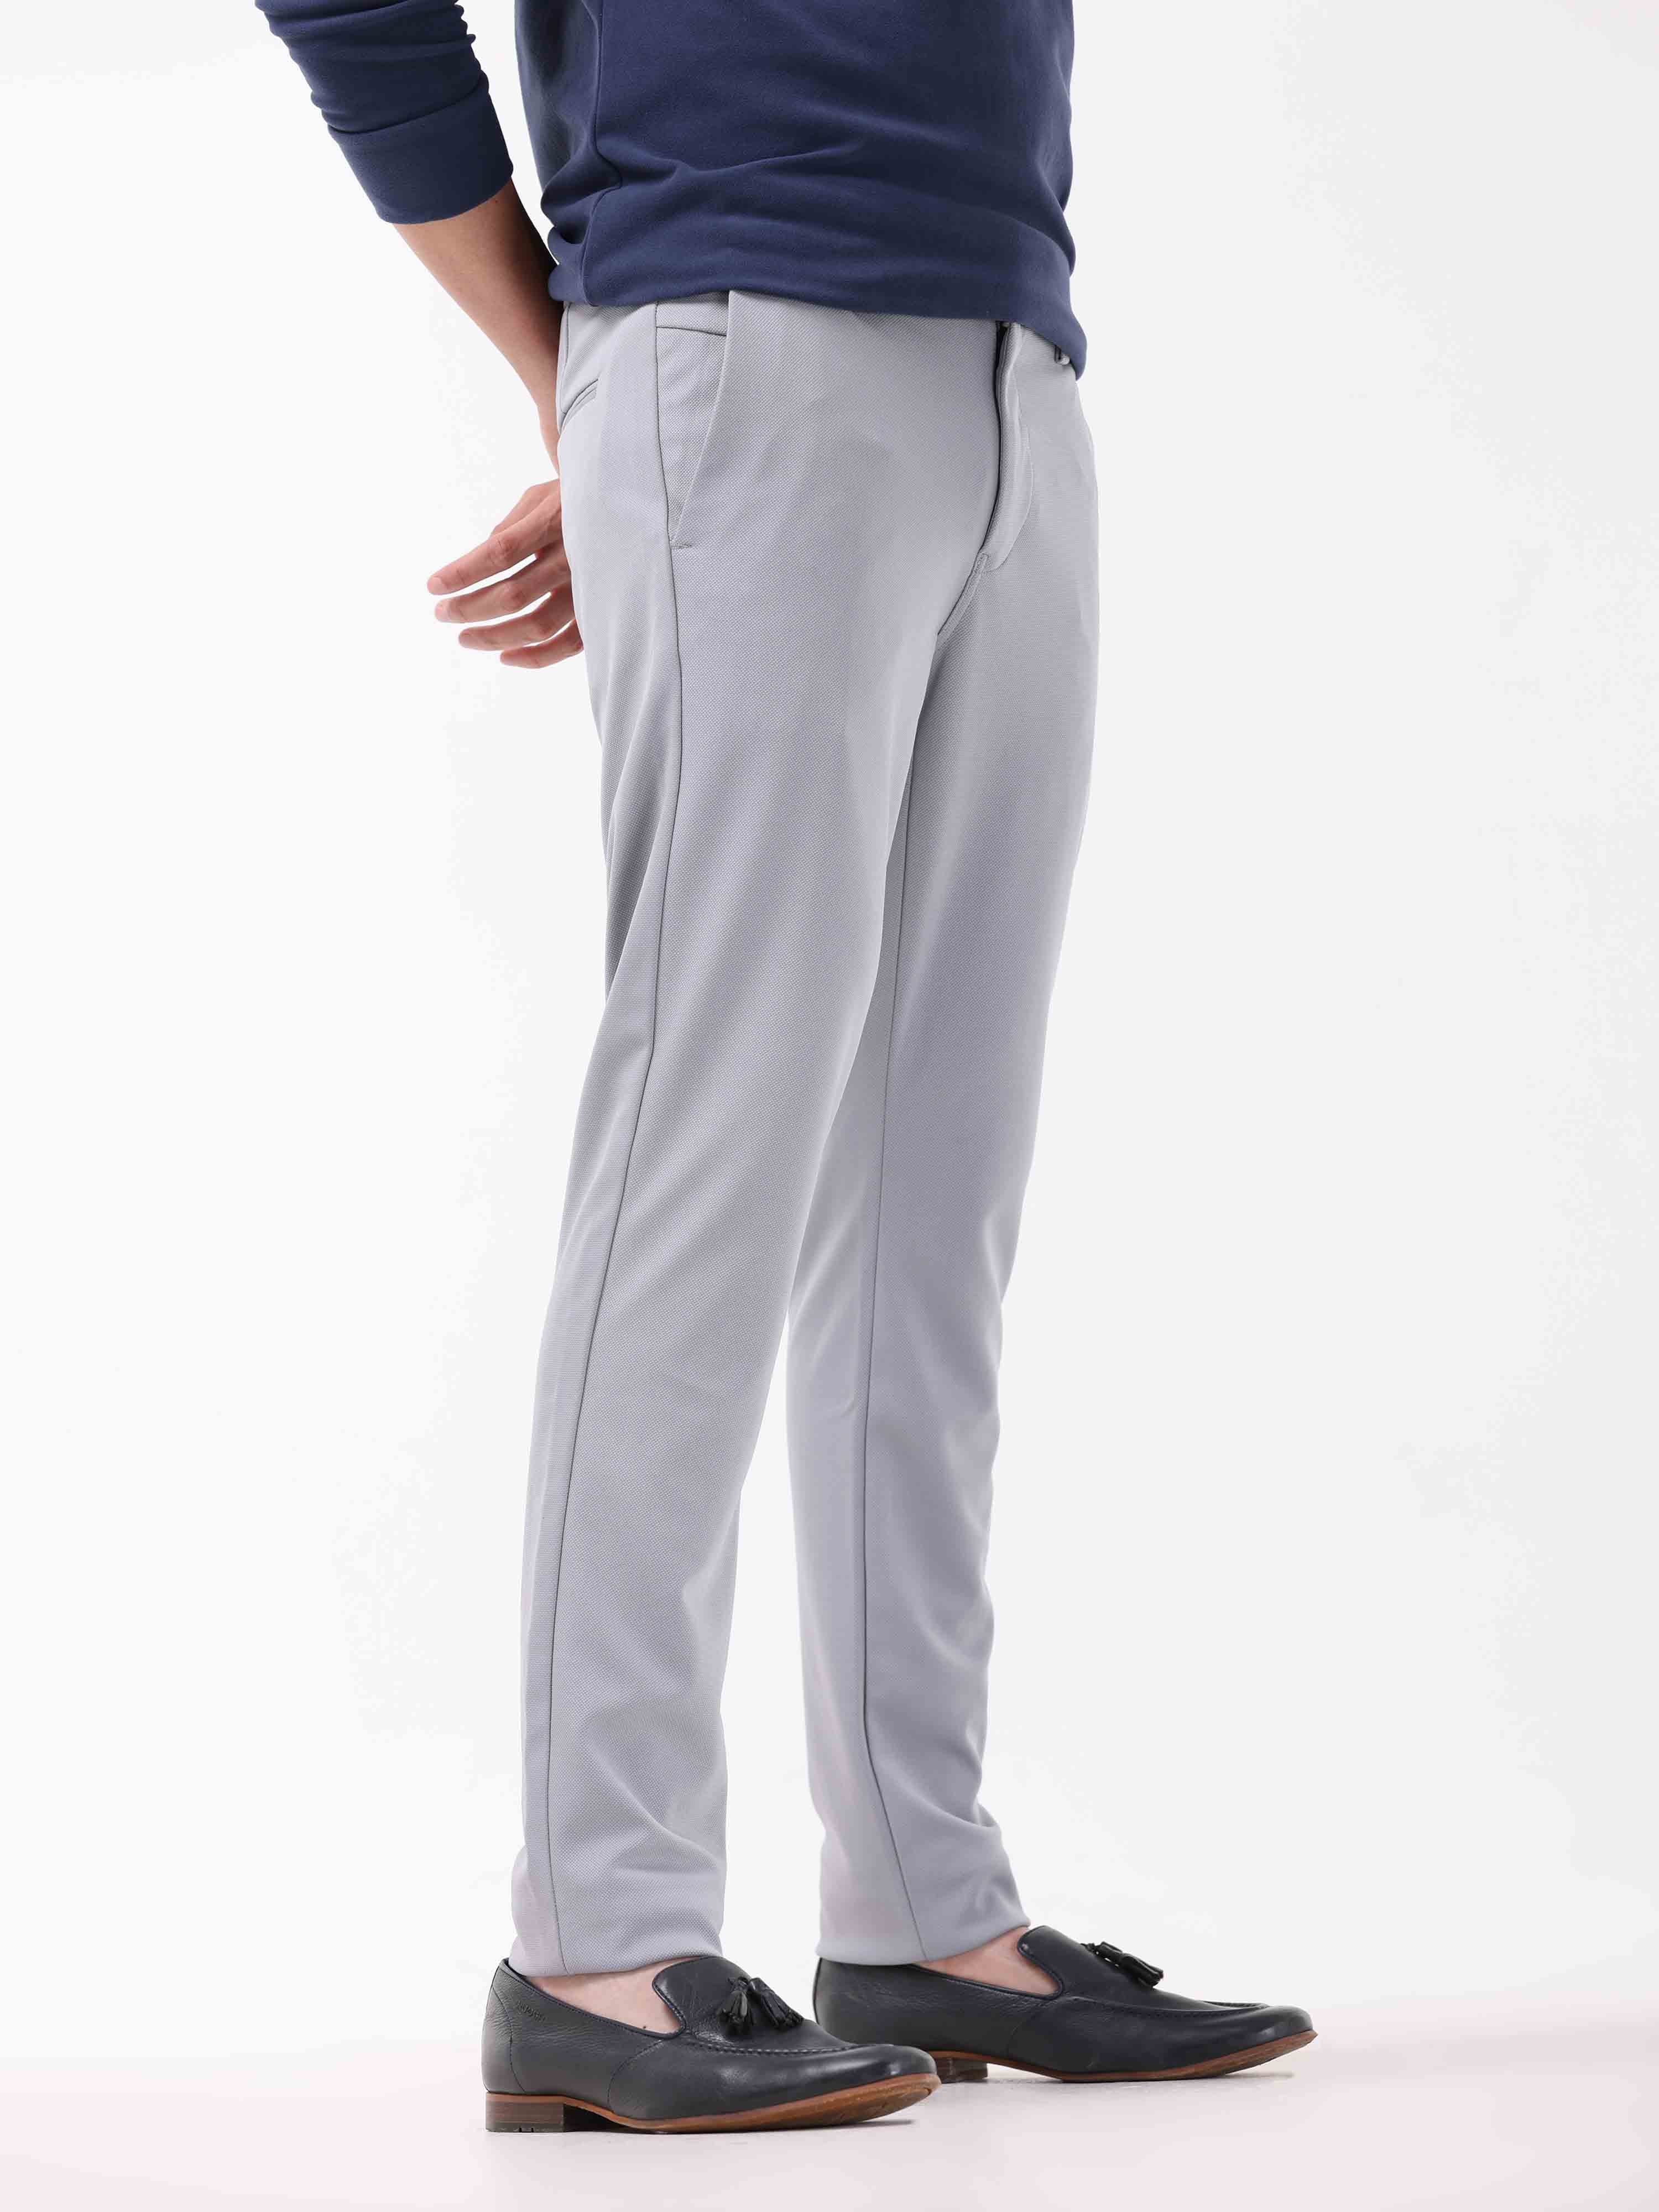 XFLWAM Men's Casual Waist Solid Elastic Pants Trousers Skinny Pants Pencil  Zipper Geometric Print Slim Fit Pants Suit pants Dress Pants Black XXL -  Walmart.com